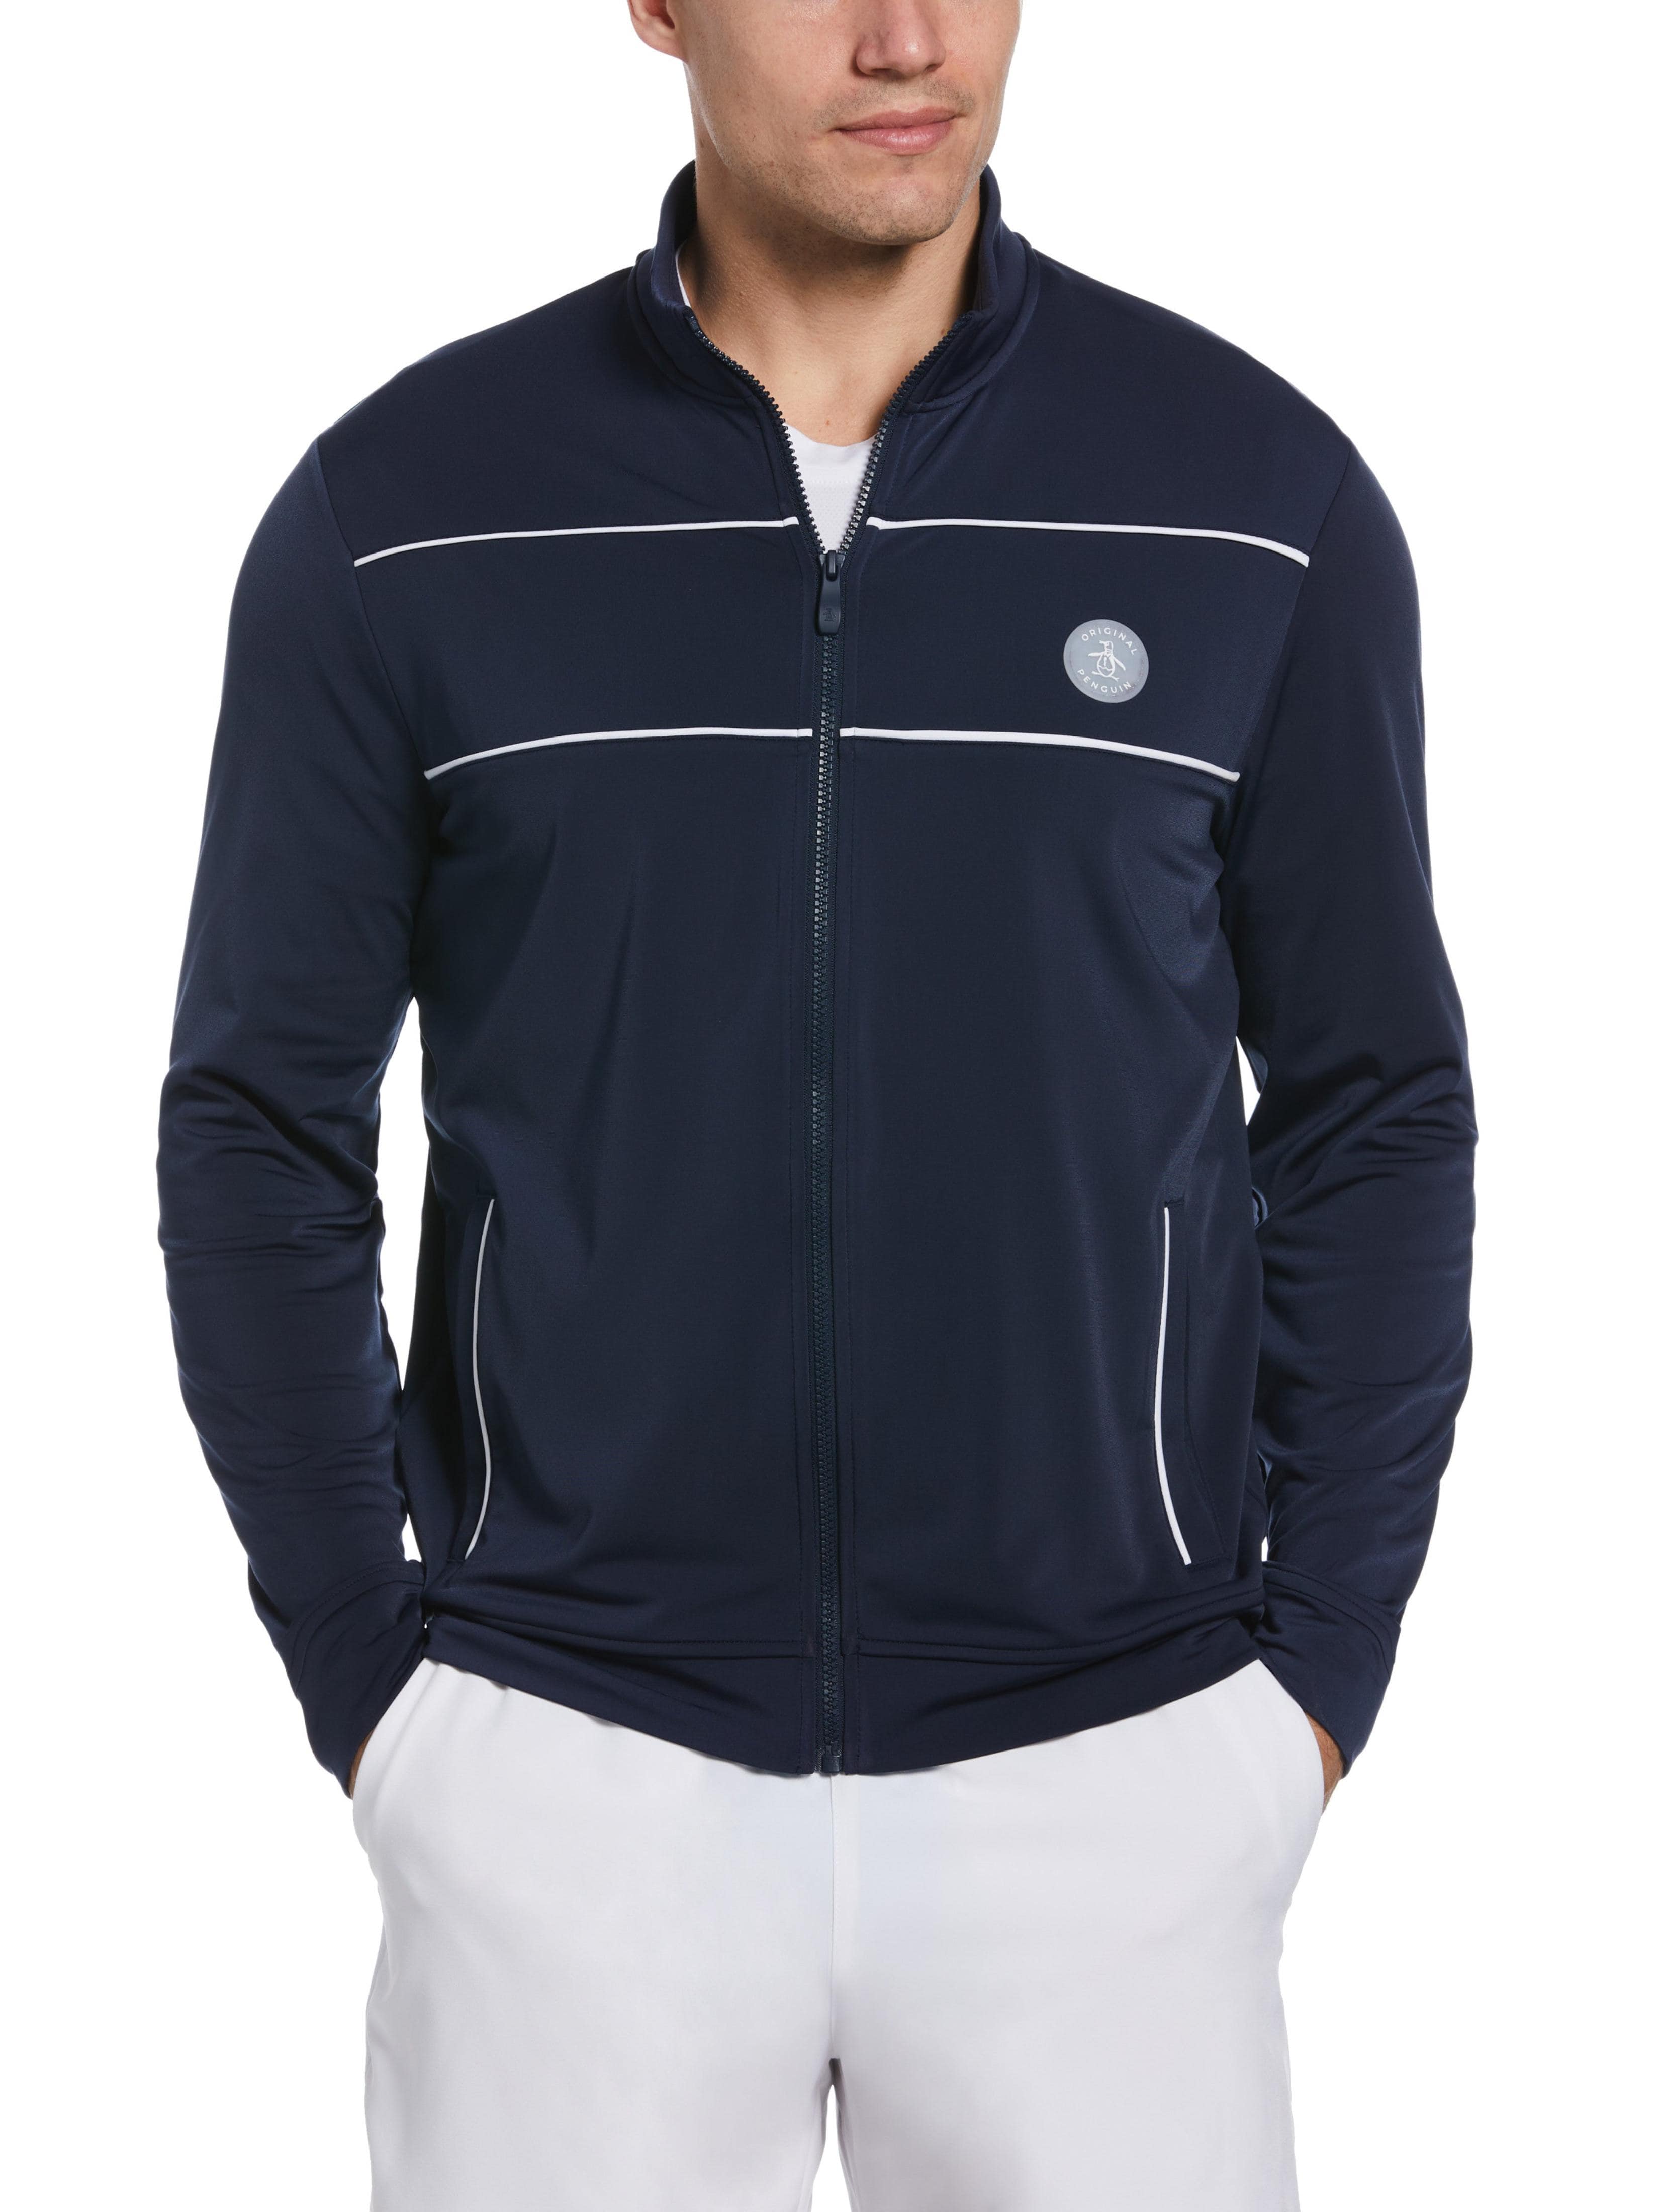 Original Penguin Mens Essential Tennis Track Jacket Top, Size 2XL, Dark Navy Blue, Polyester/Elastane | Golf Apparel Shop